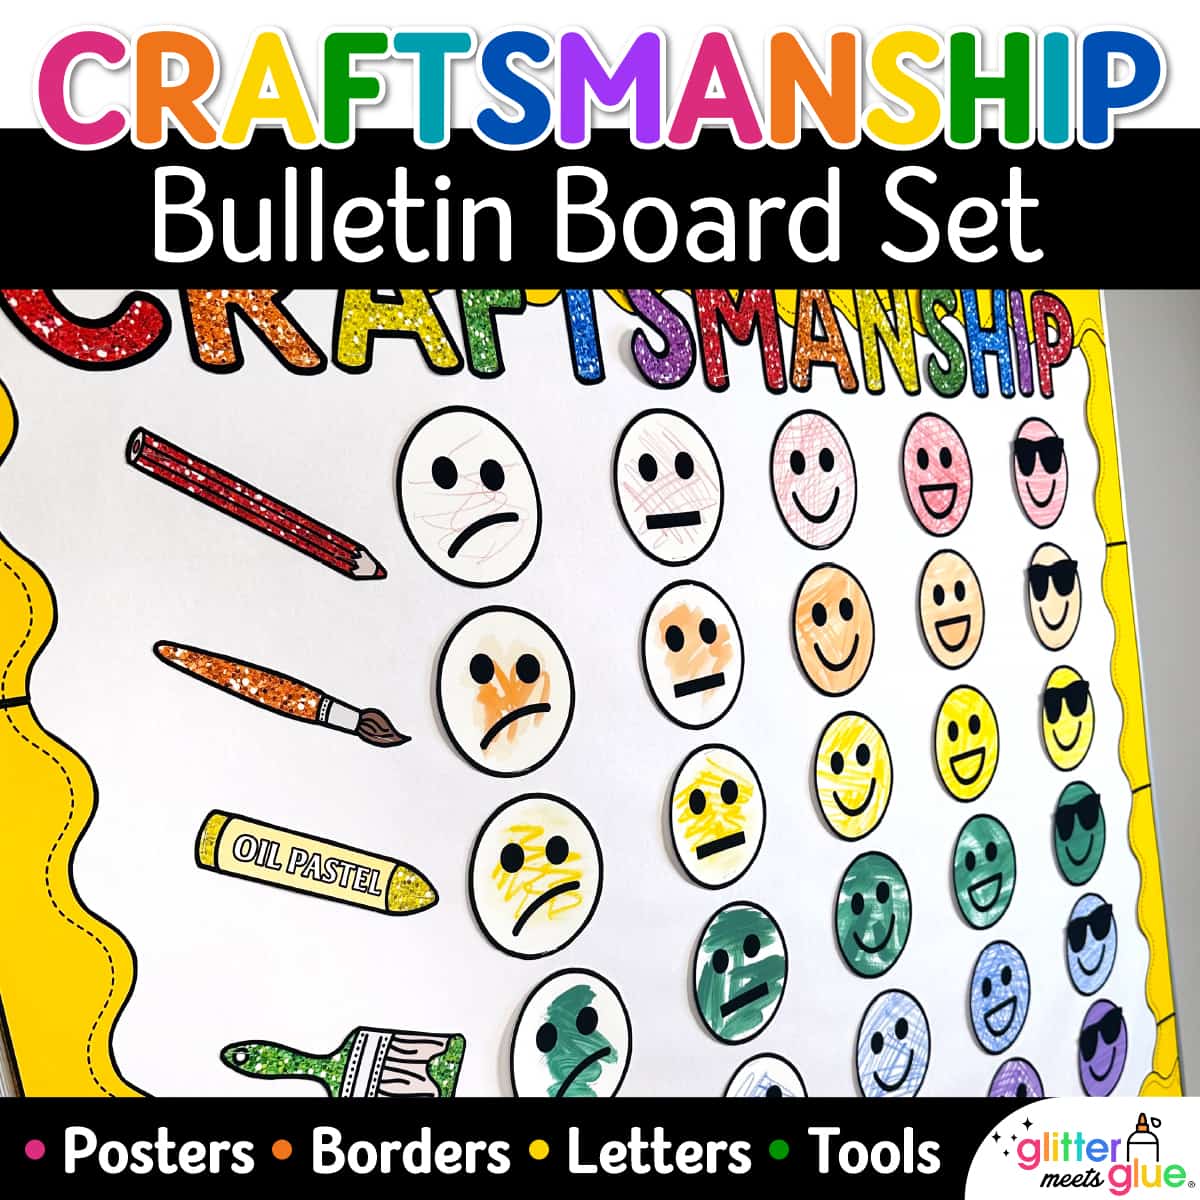 craftsmanship rubric bulletin board for art teachers